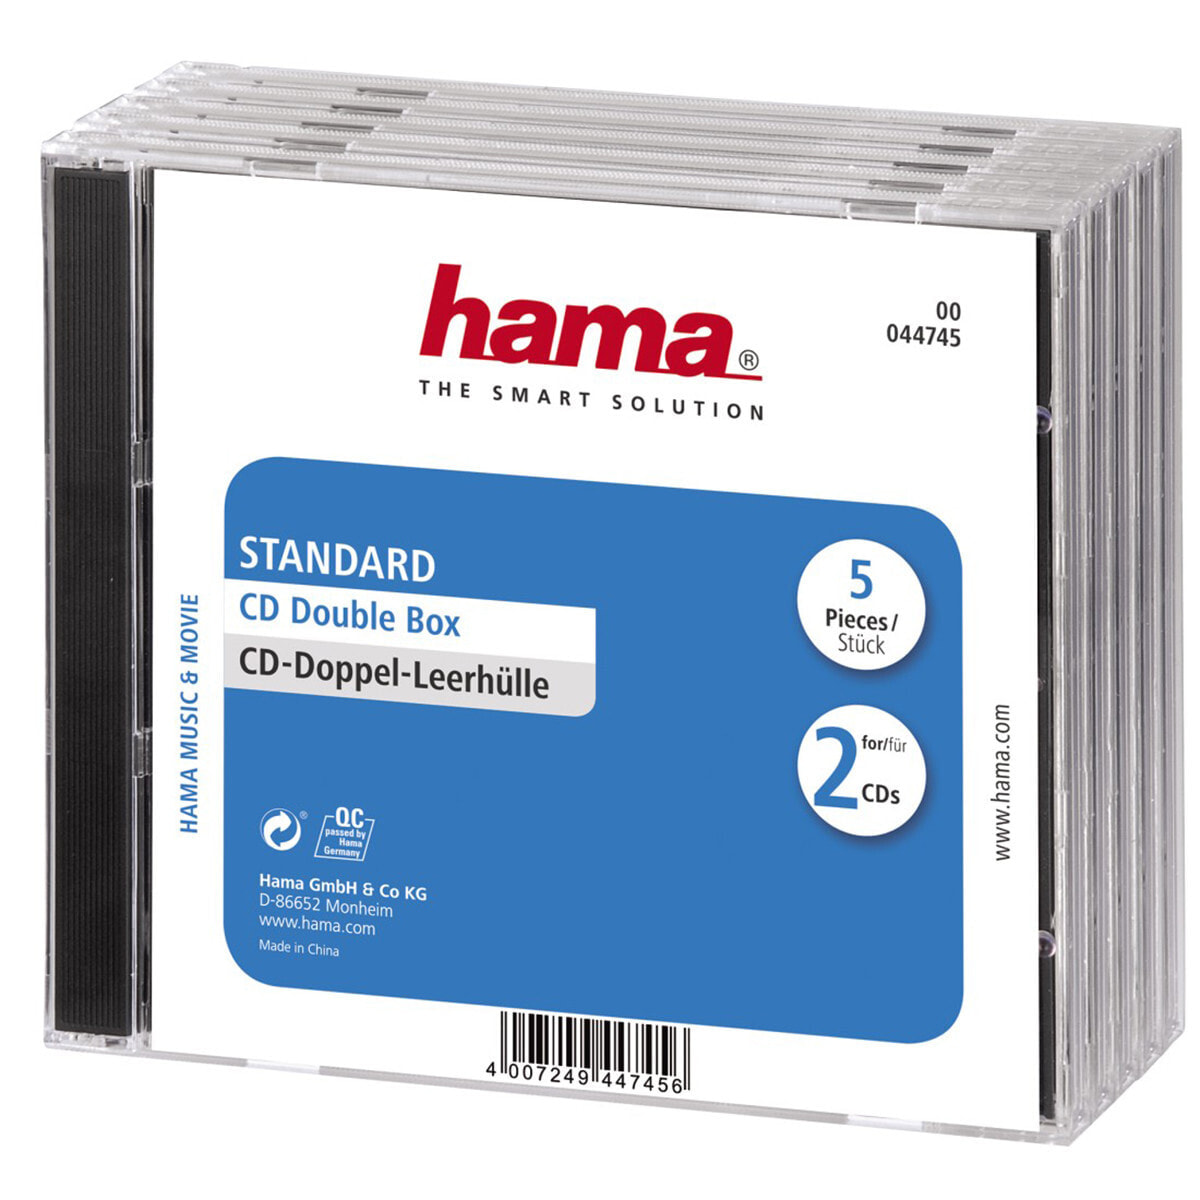 Hama CD Double Jewel Case Standard, Pack 5 2 диск (ов) Прозрачный 00044745